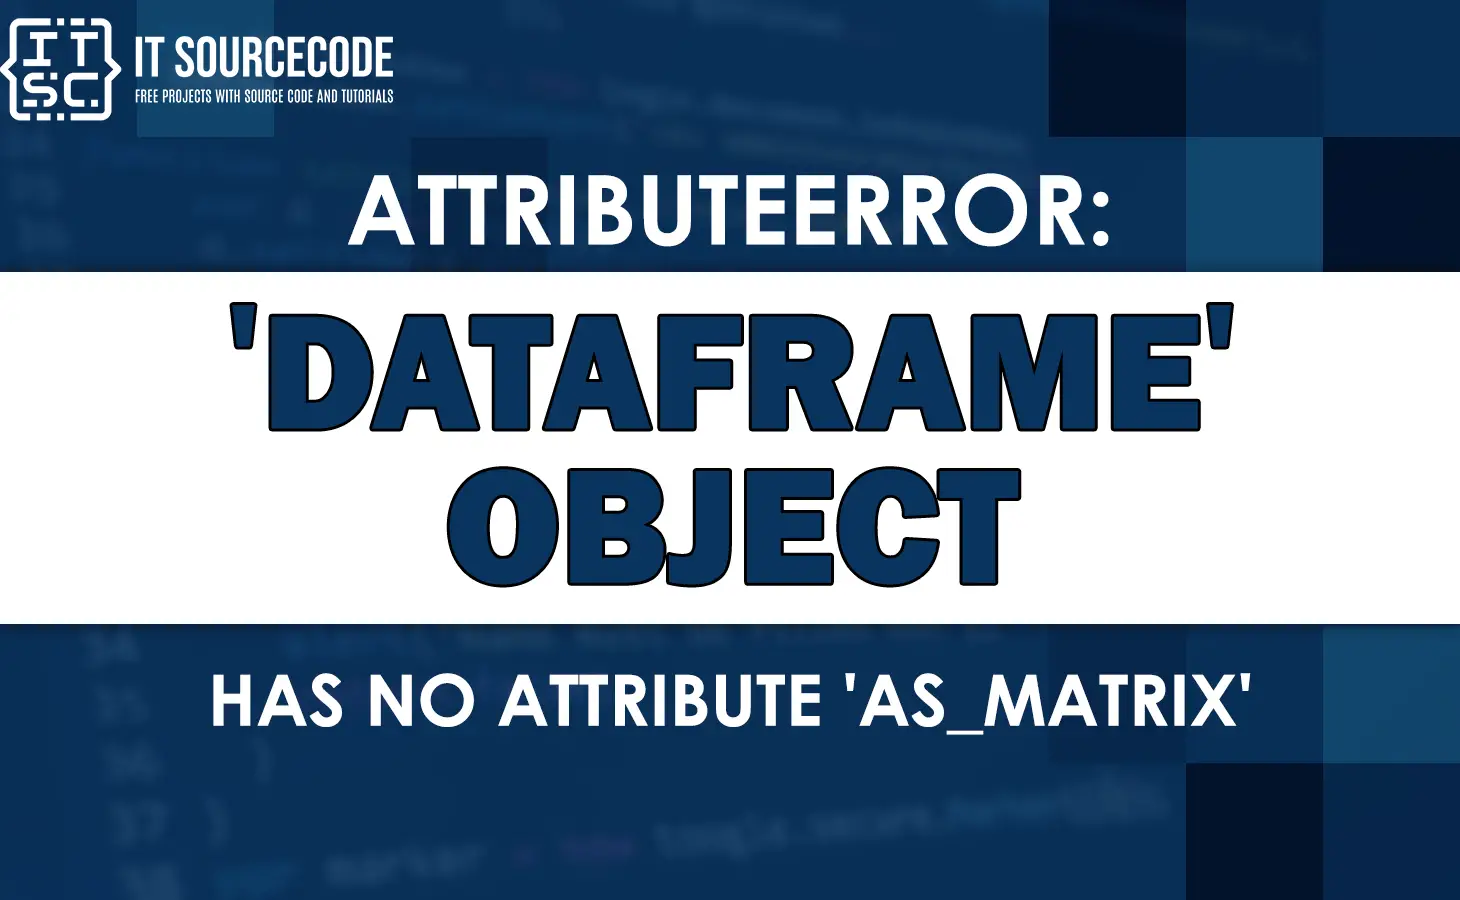 Attributeerror: dataframe object has no attribute as_matrix